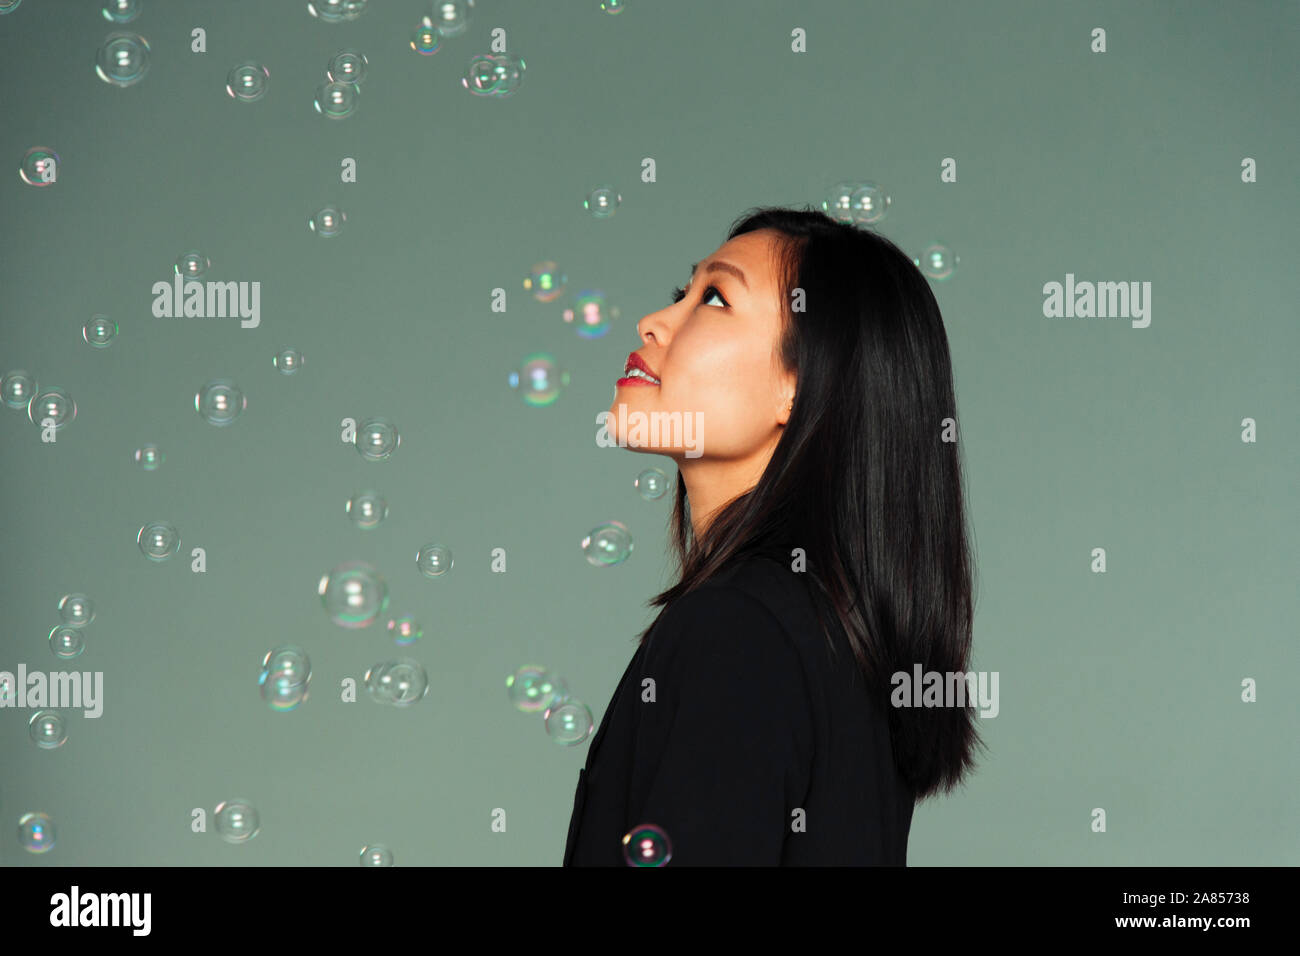 Curious, imaginative young woman watching falling bubbles Stock Photo